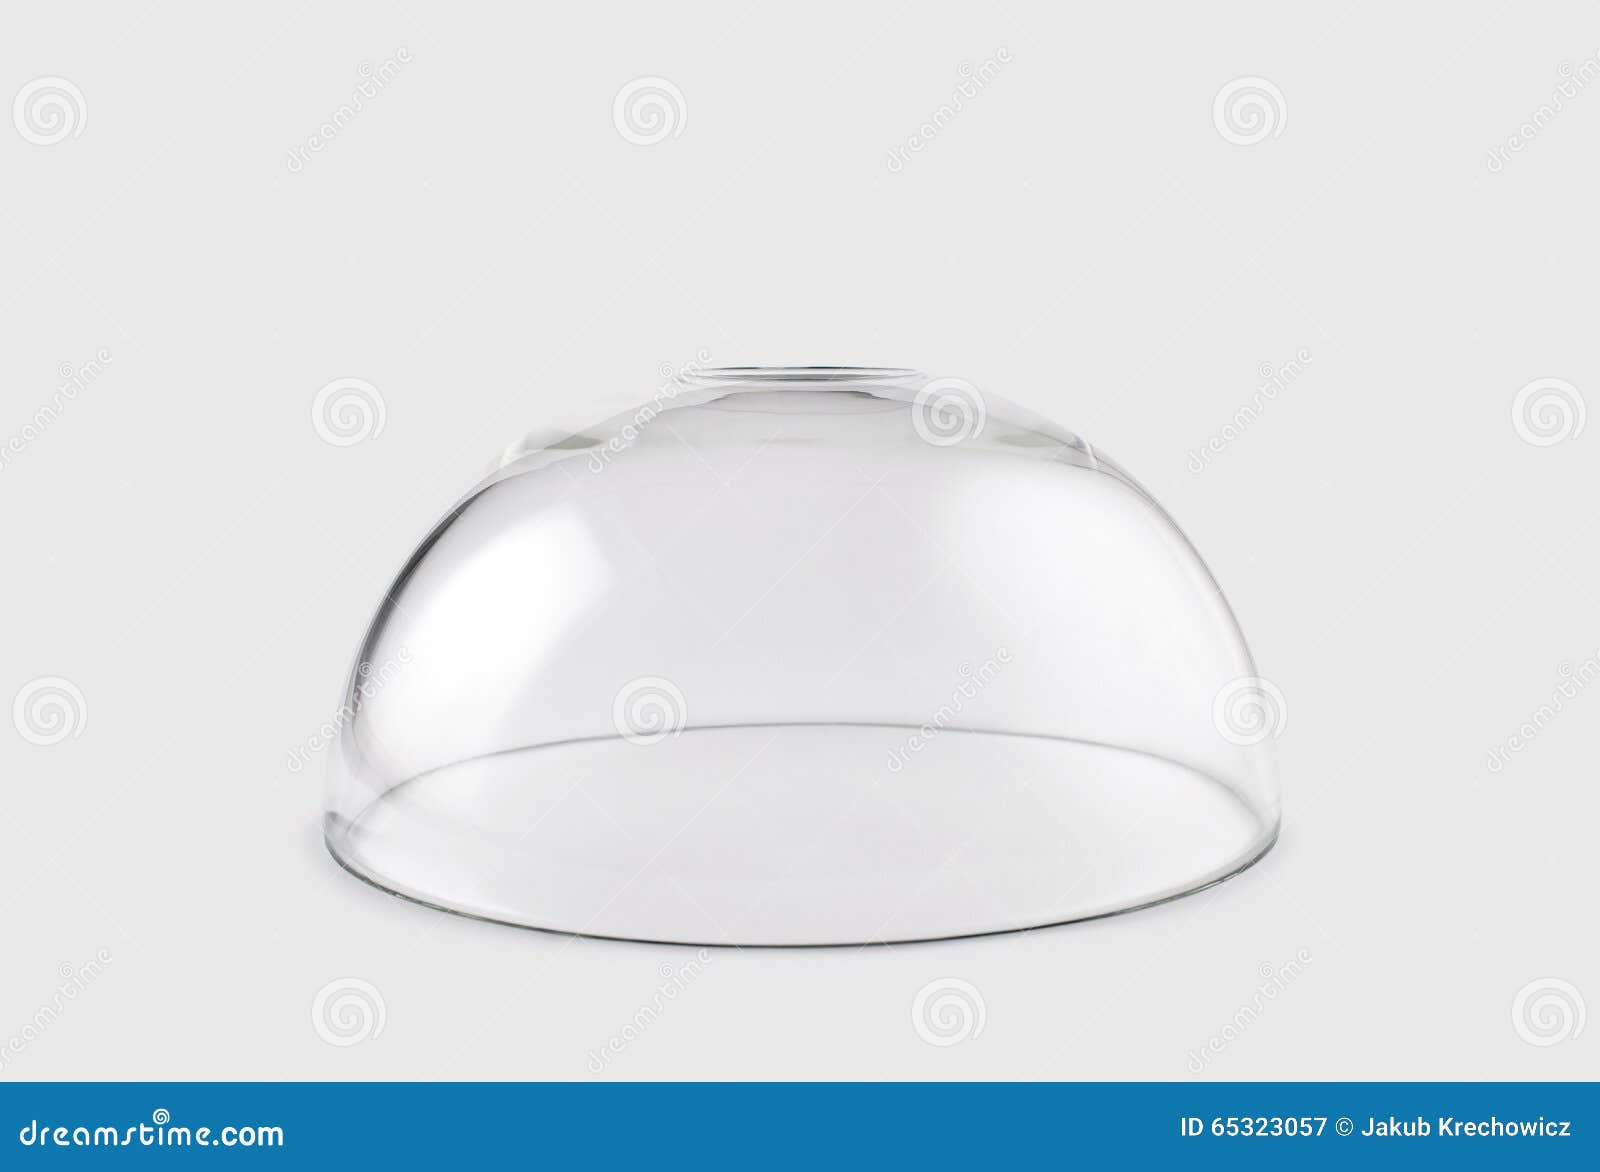 empty transparent glass dome